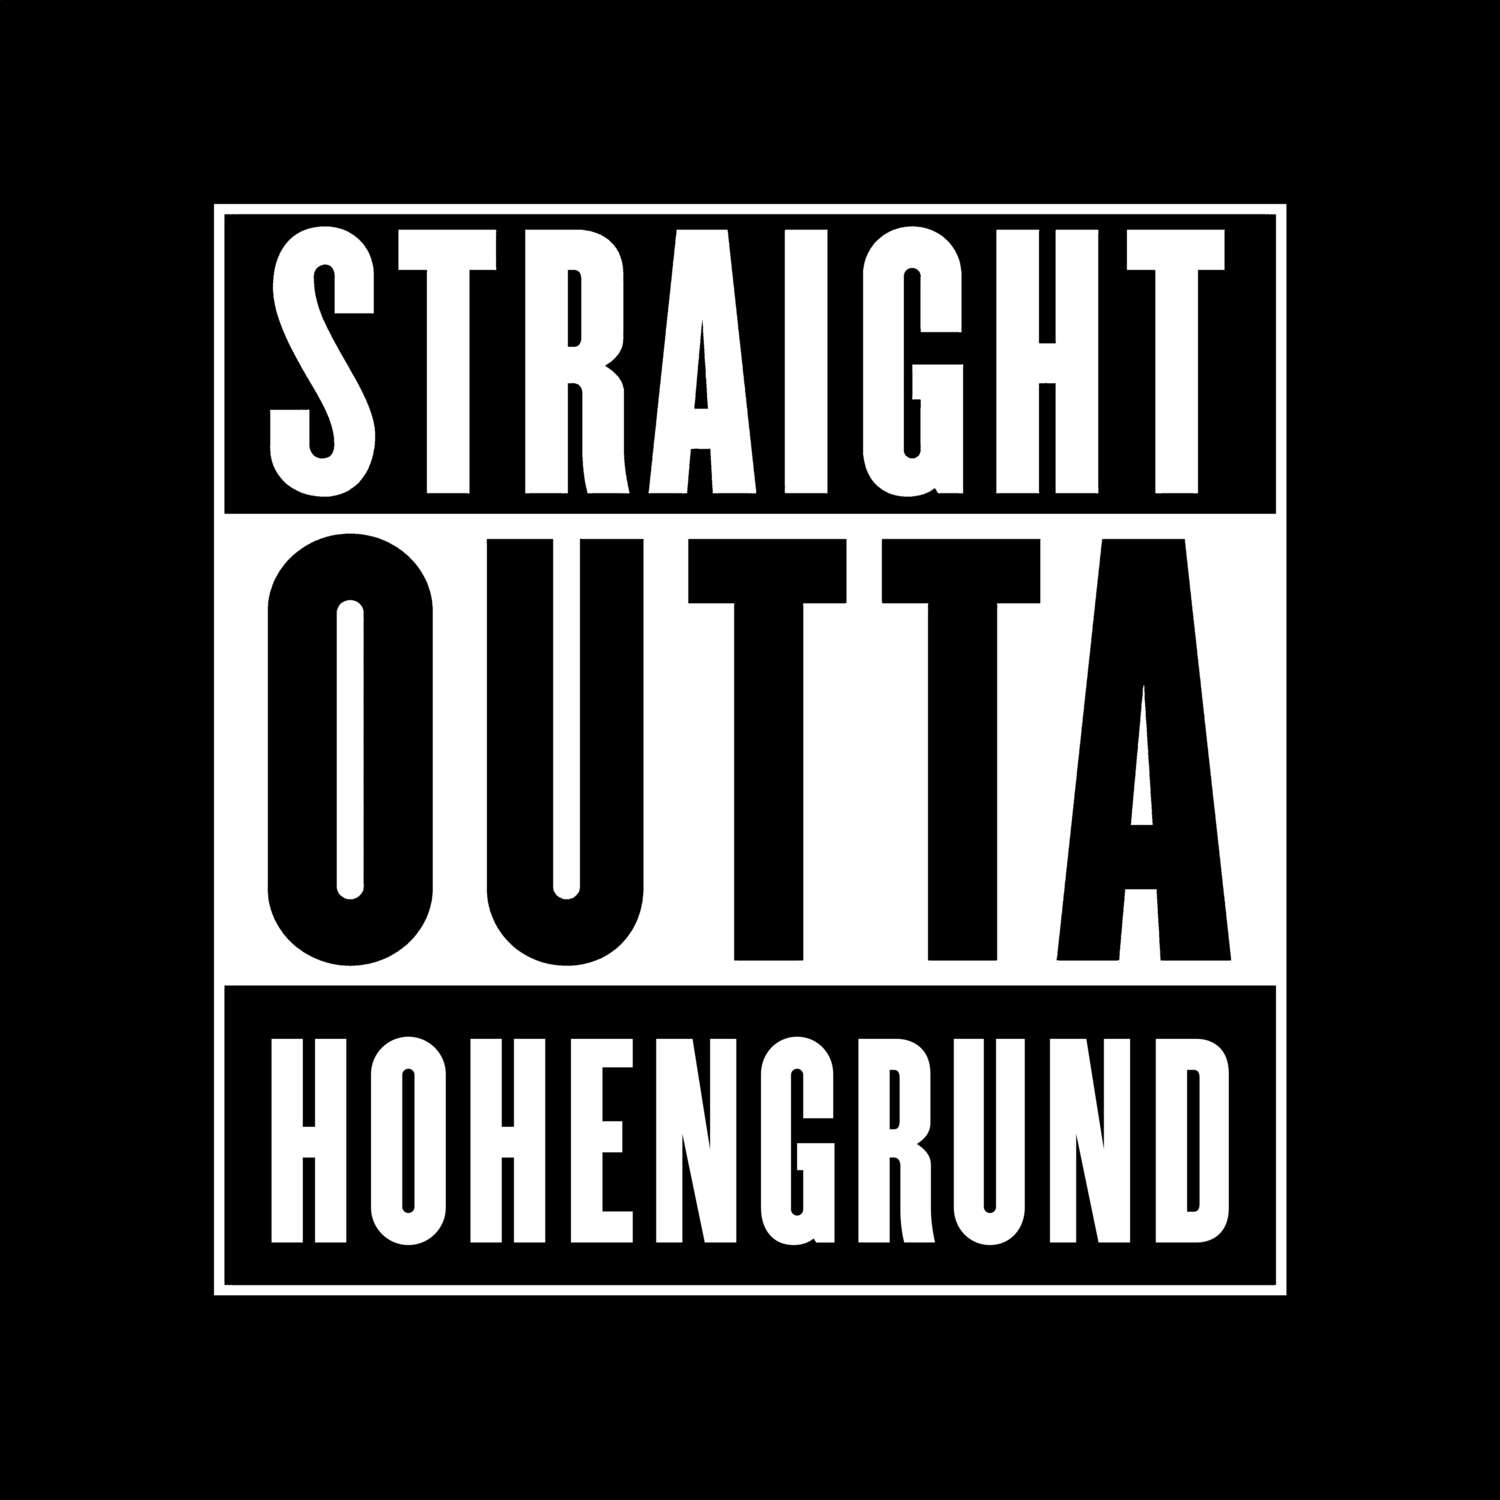 Hohengrund T-Shirt »Straight Outta«